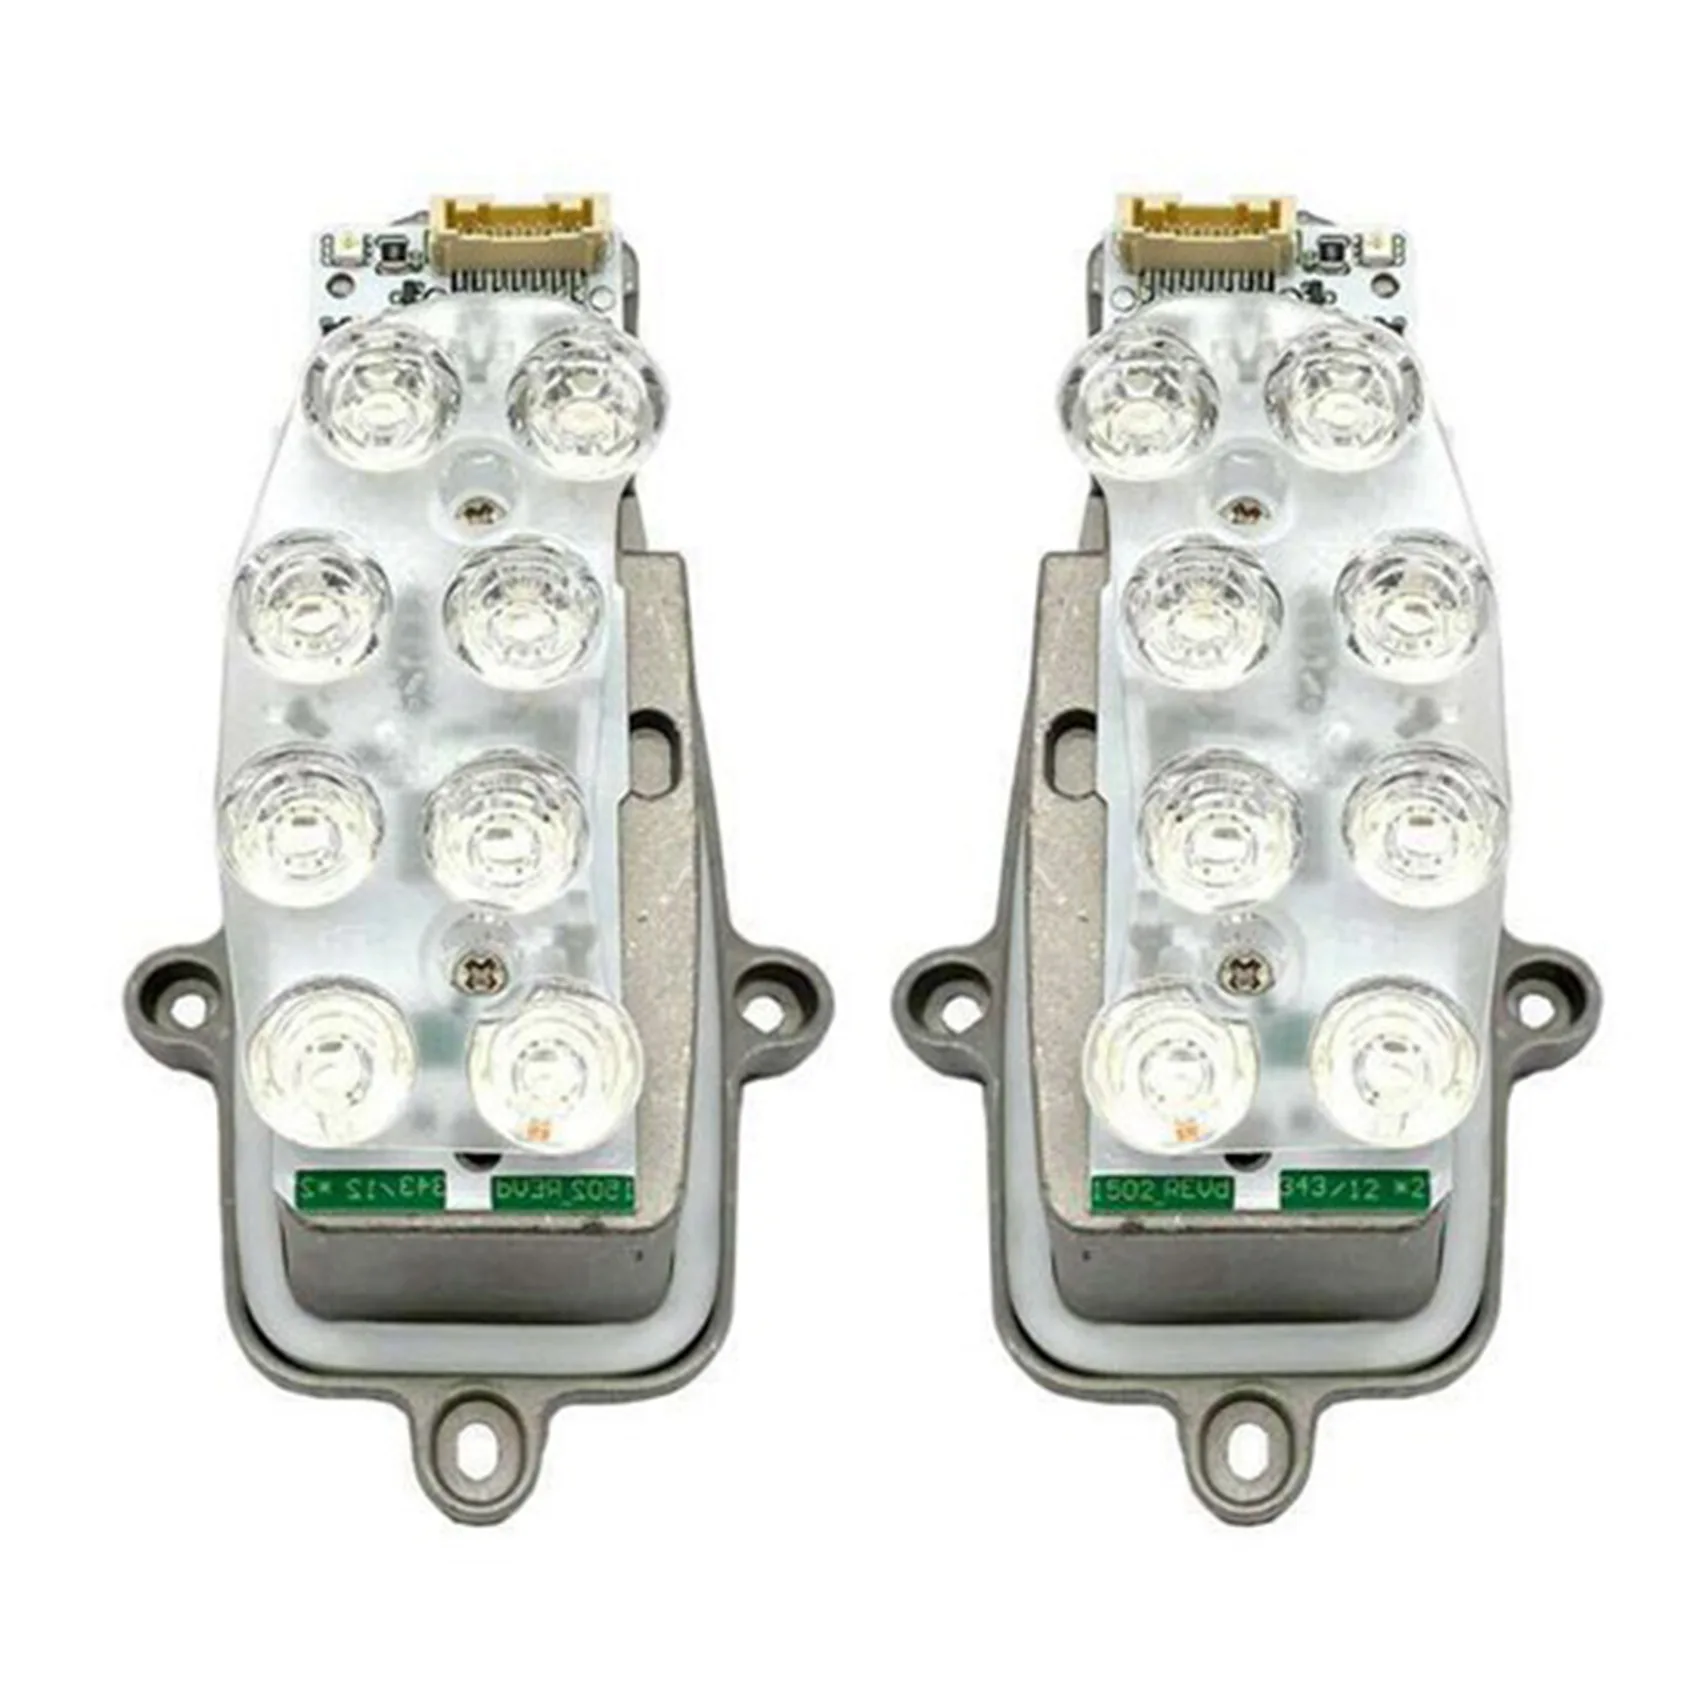 

Car Left/Right LED Turn Signal Control Module for-BMW 7 Series F01 F02 F03 63117339057 63117339058